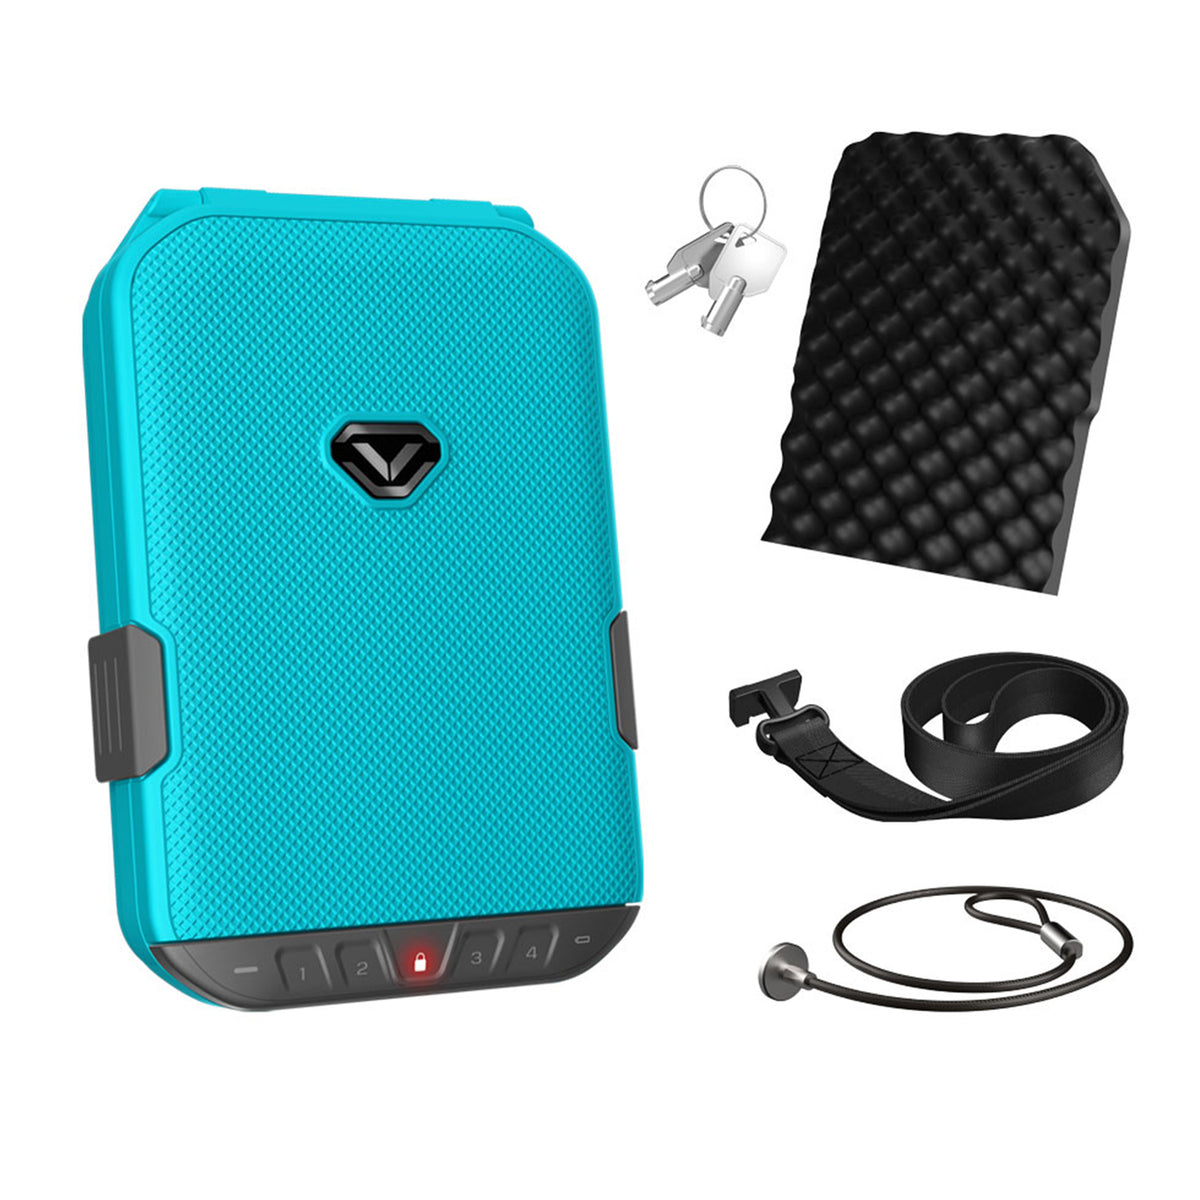 Vaultek - lifepod 1.0 slingbag - Luxe Blue Lifepod and Heather Gray slingbag  - accessories - MODLOCK